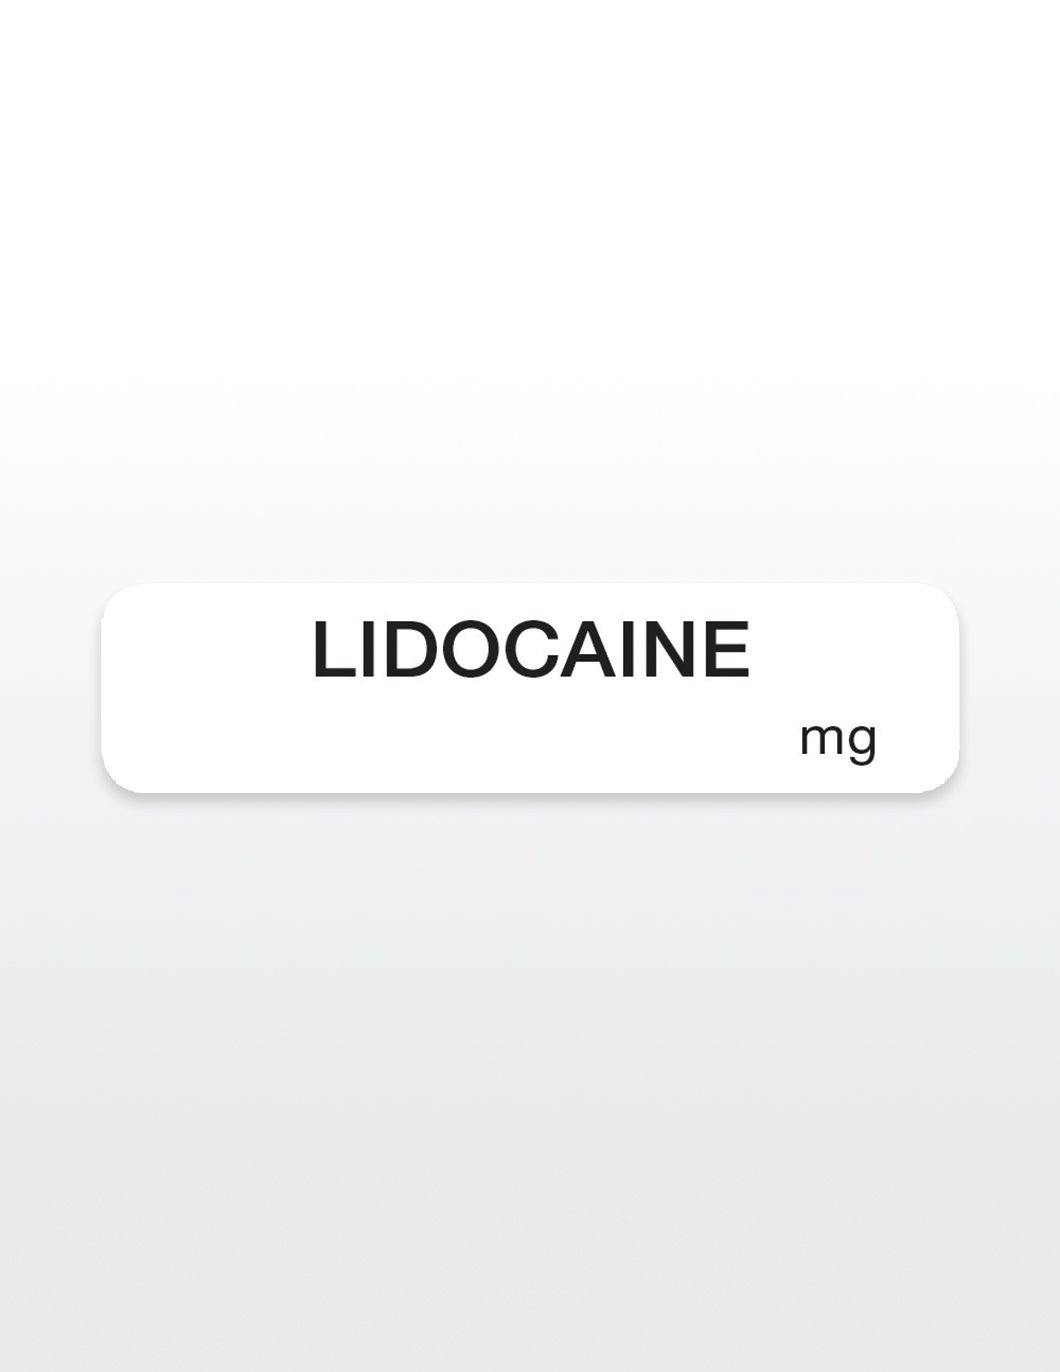 lidocaine-drug-syringe-stickers